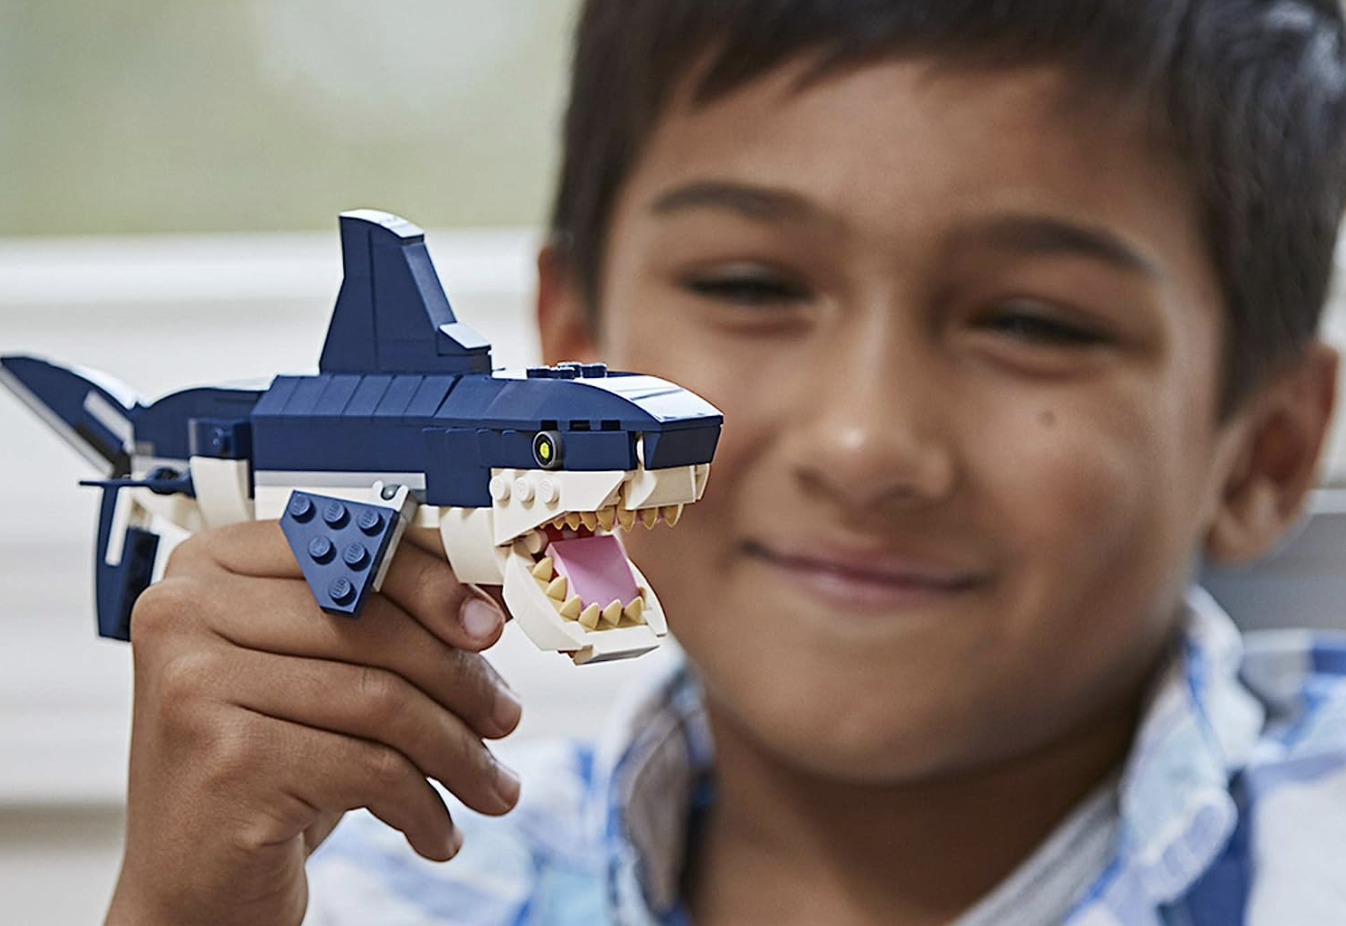 lego sets kids gift ideas amazon